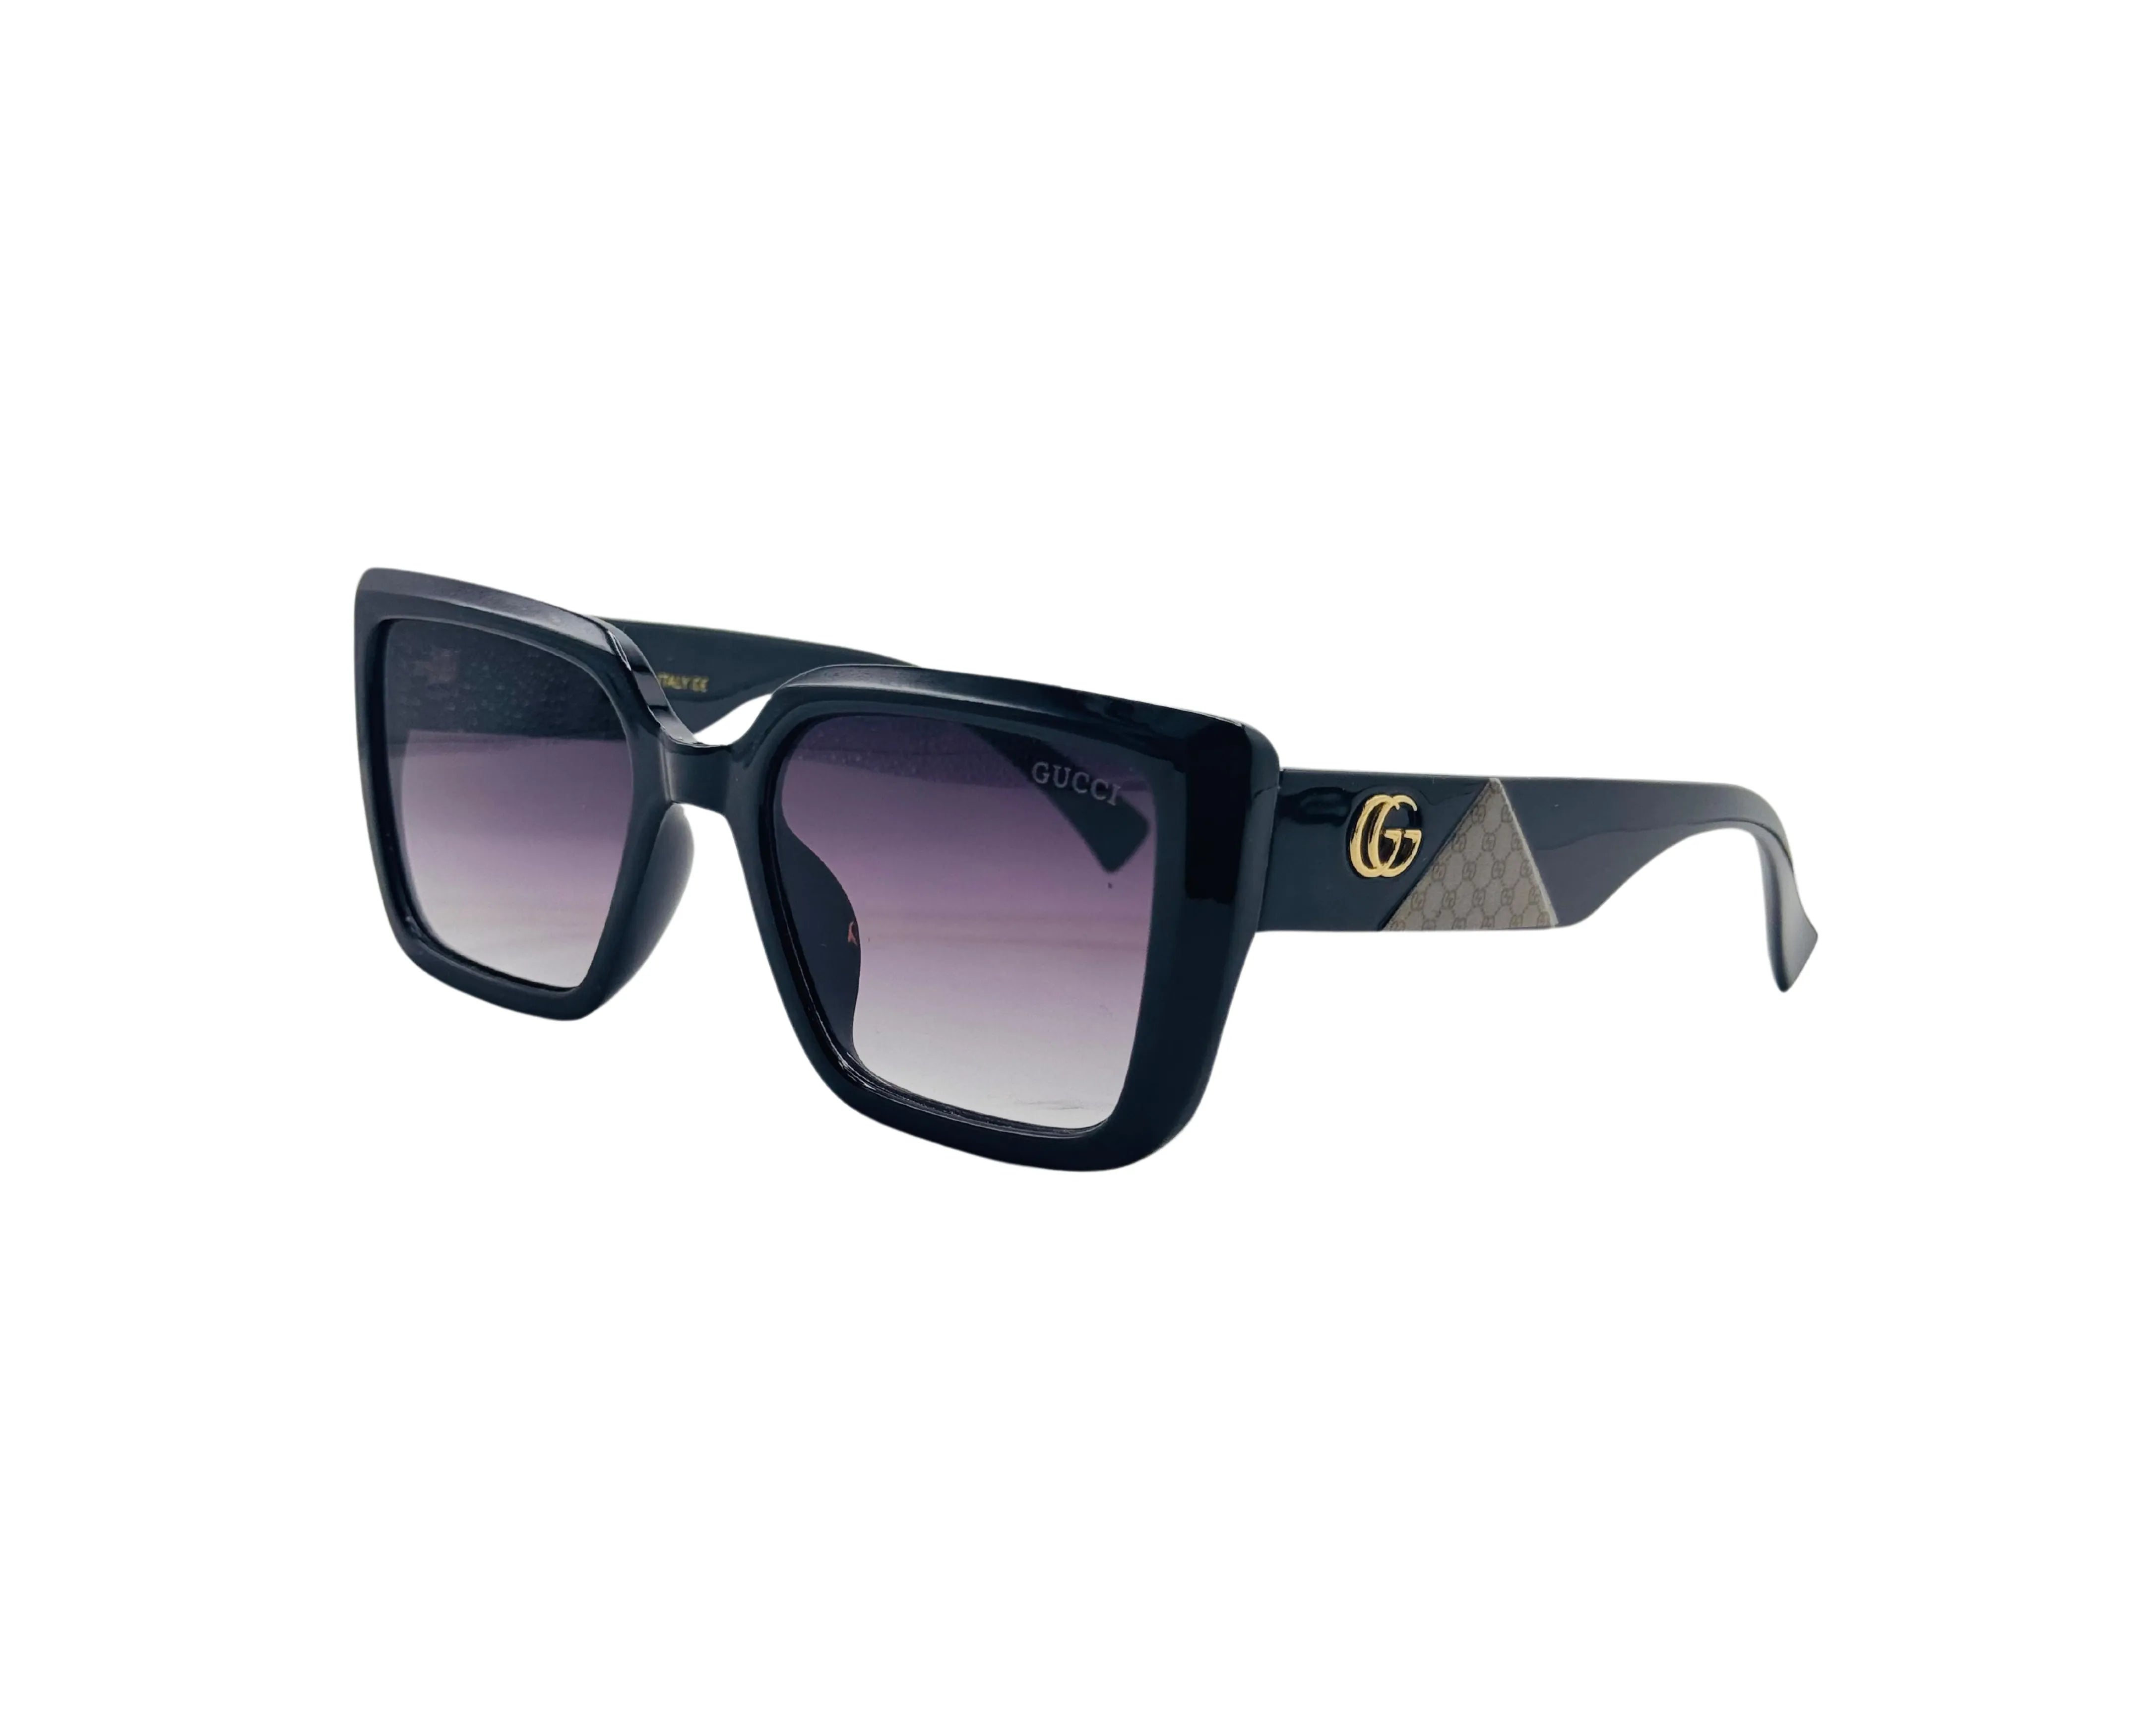 NS Deluxe - 9086 - Black - Sunglasses